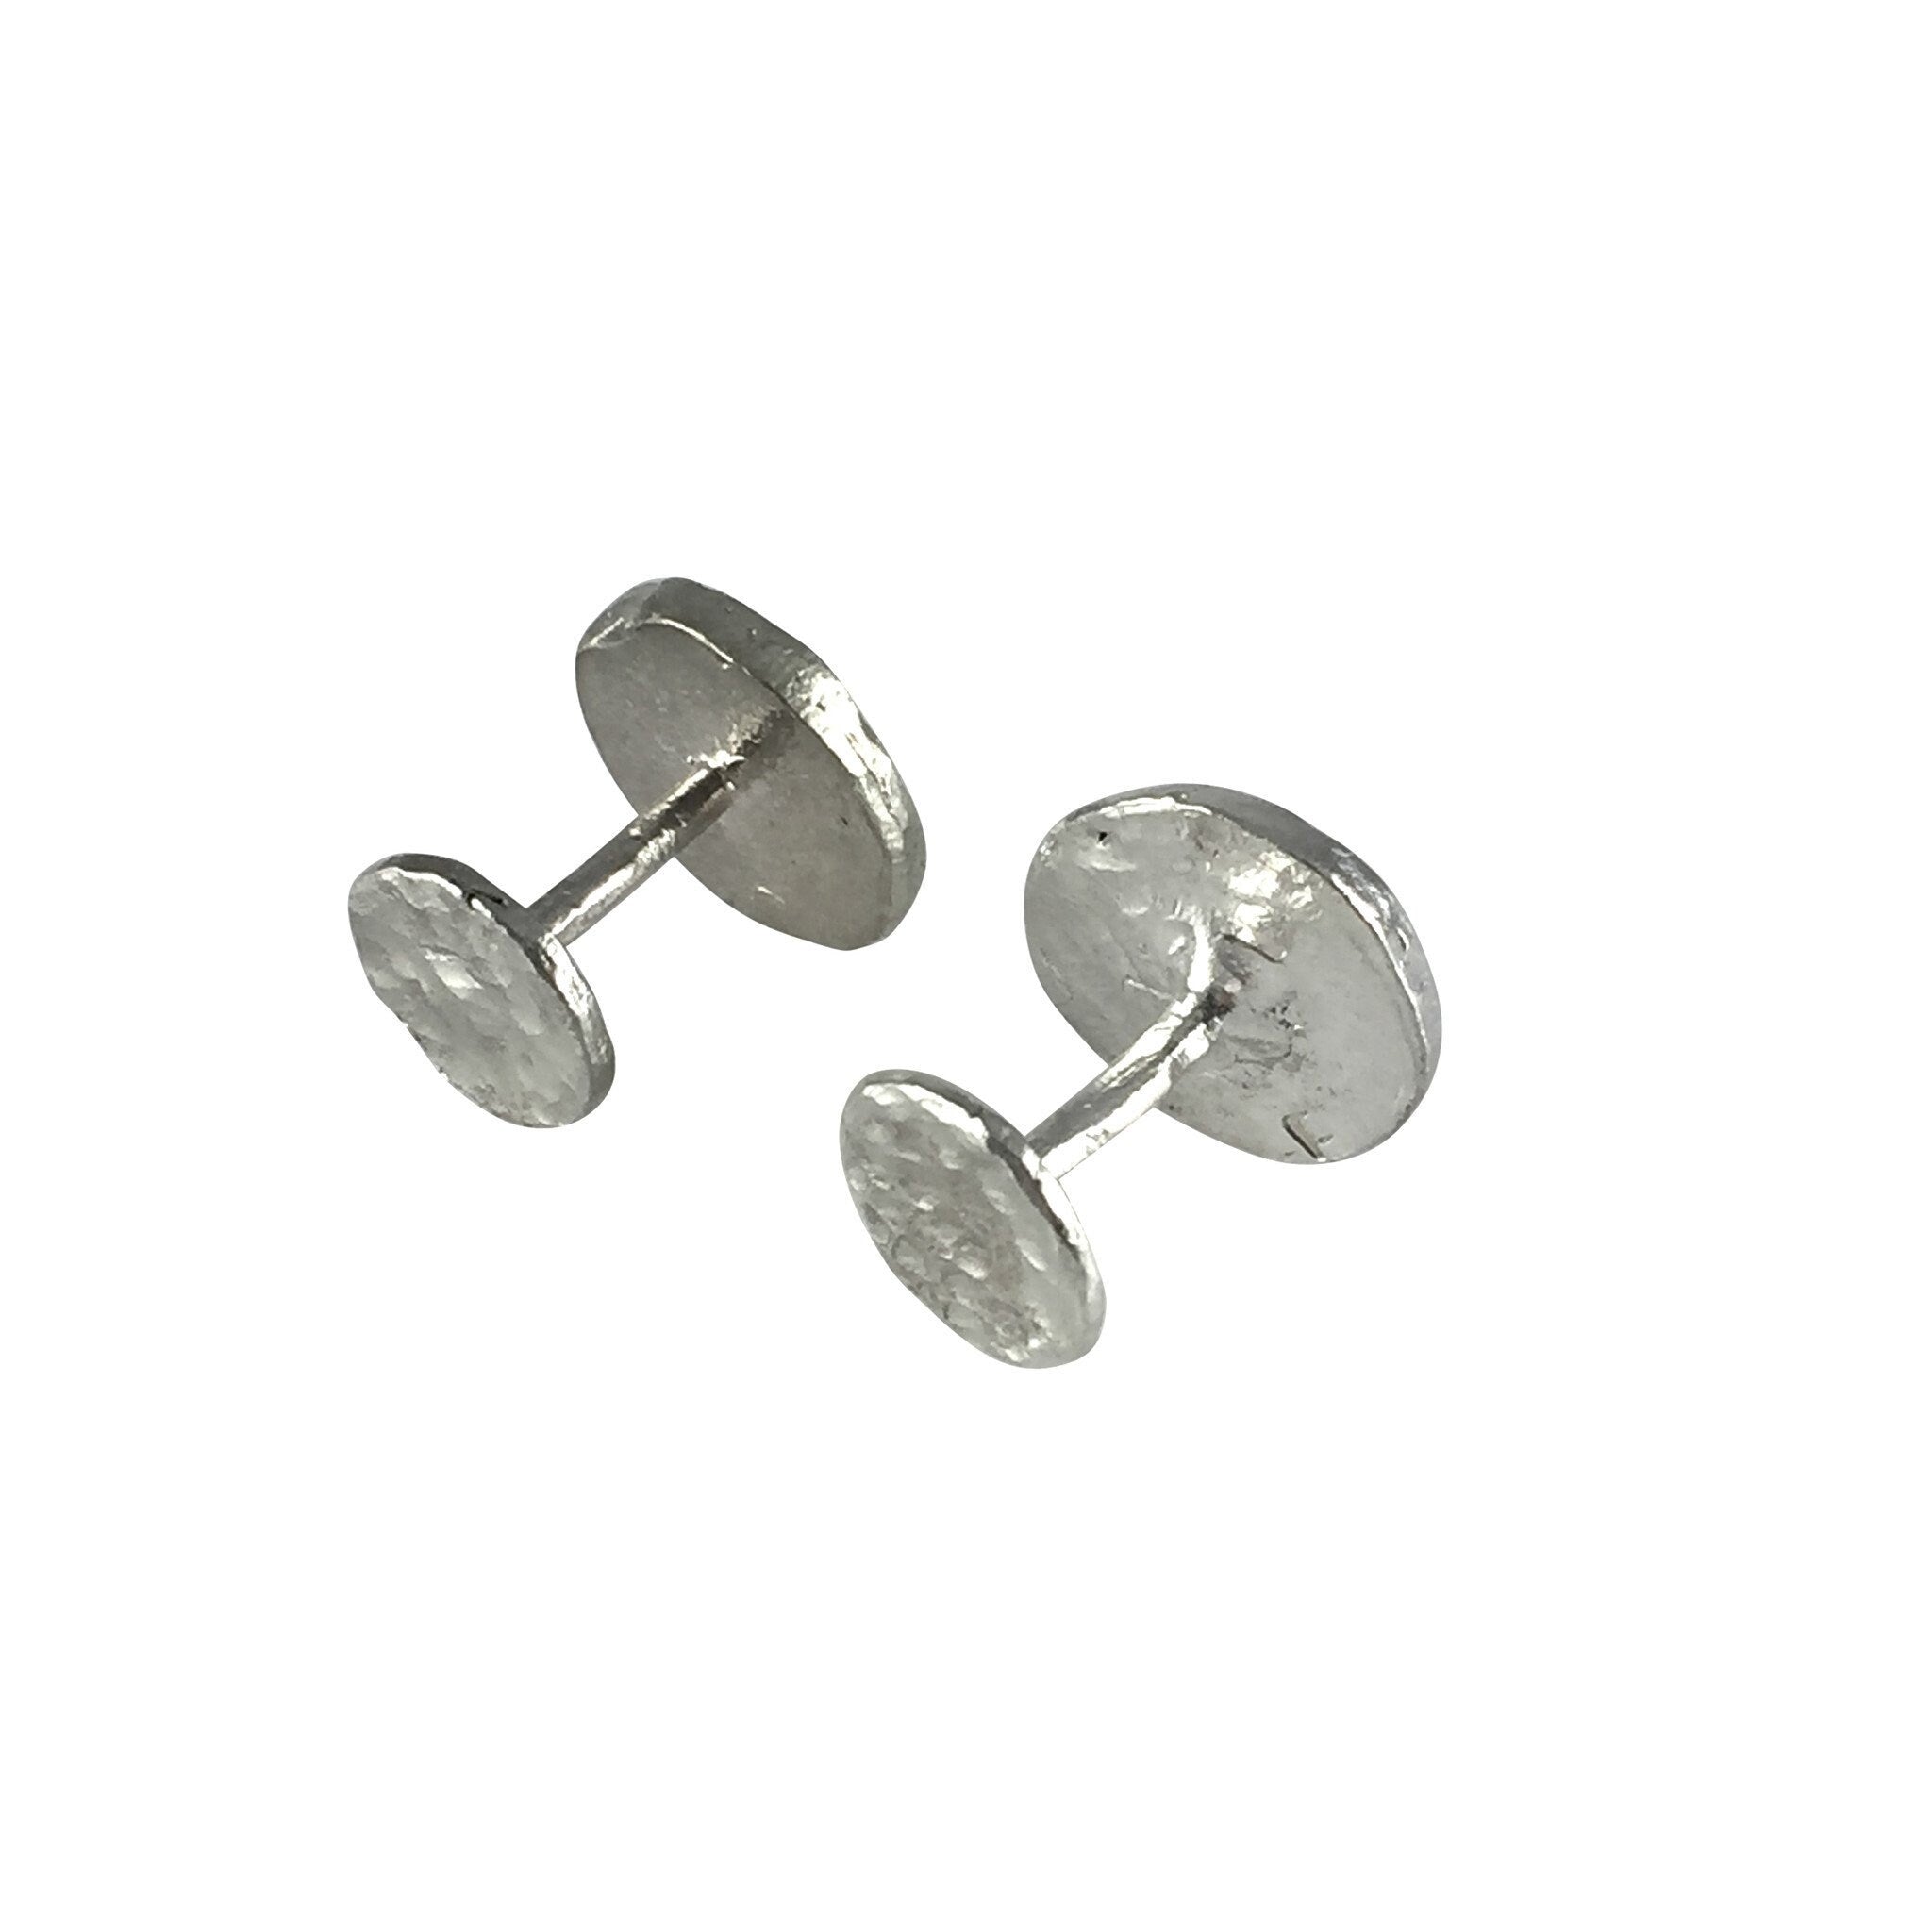 Clear diamond button cufflinks